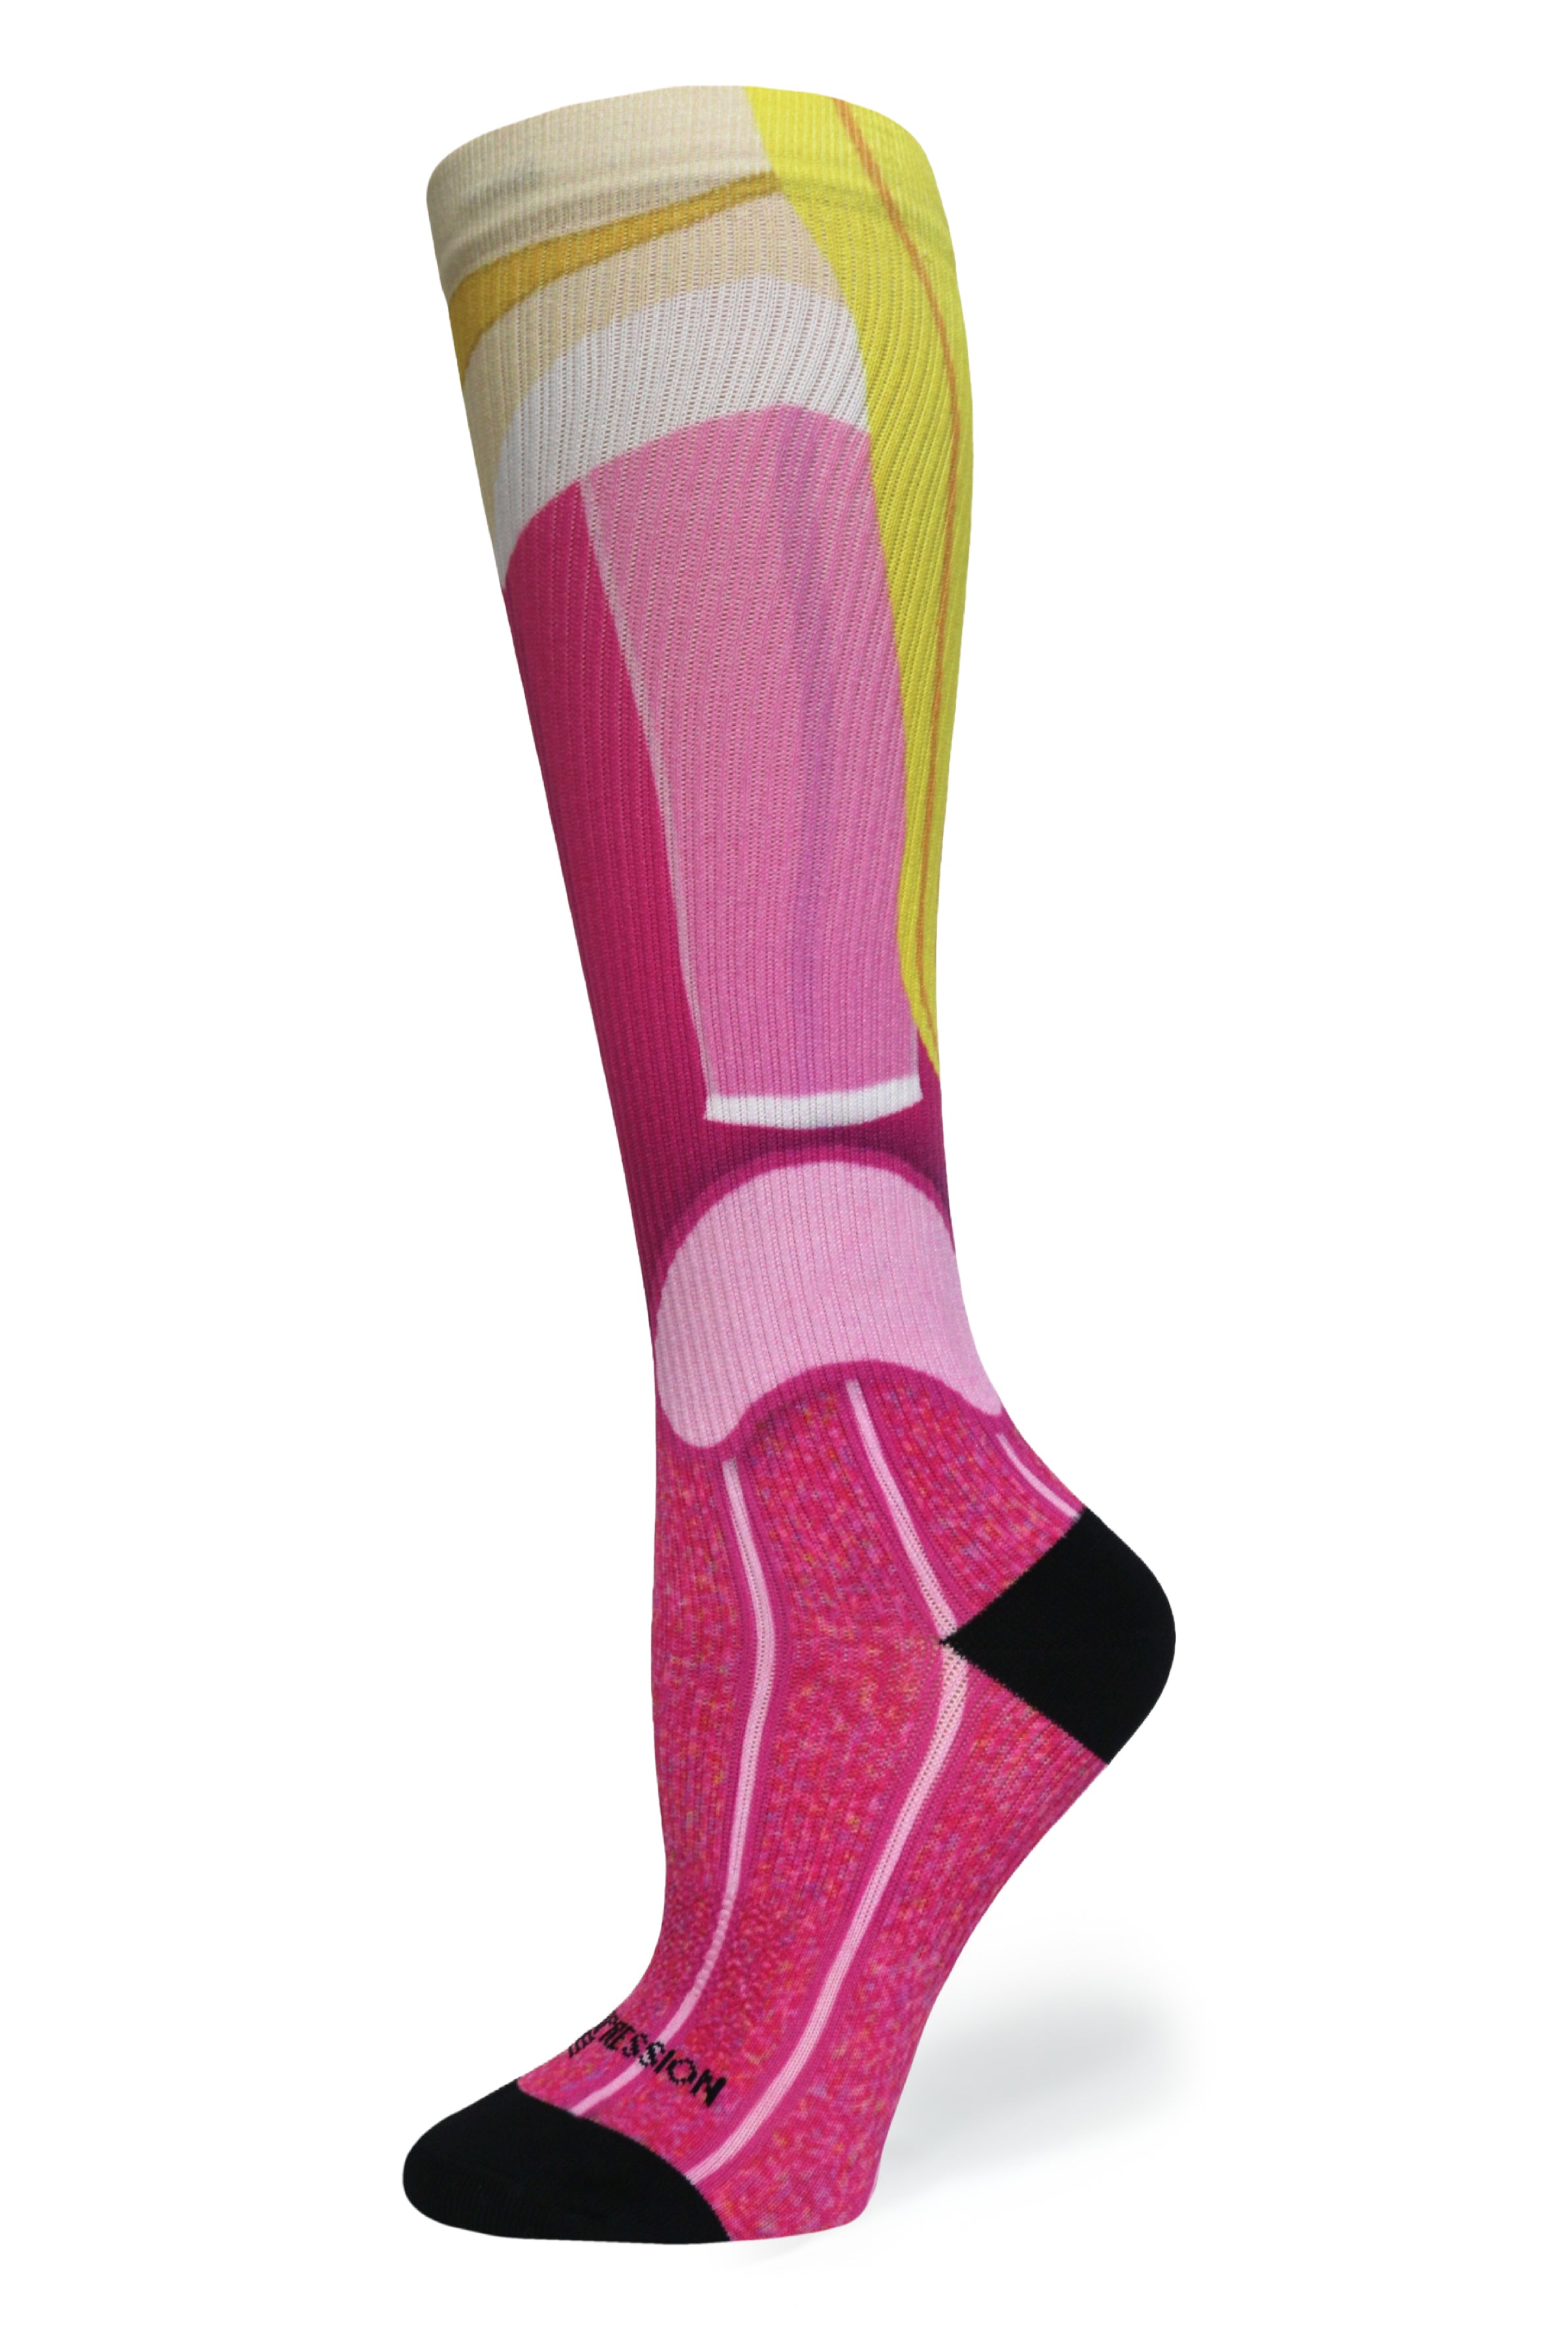 360 Rosey Princess OTC Compression Socks (Standard & Extra Wide)